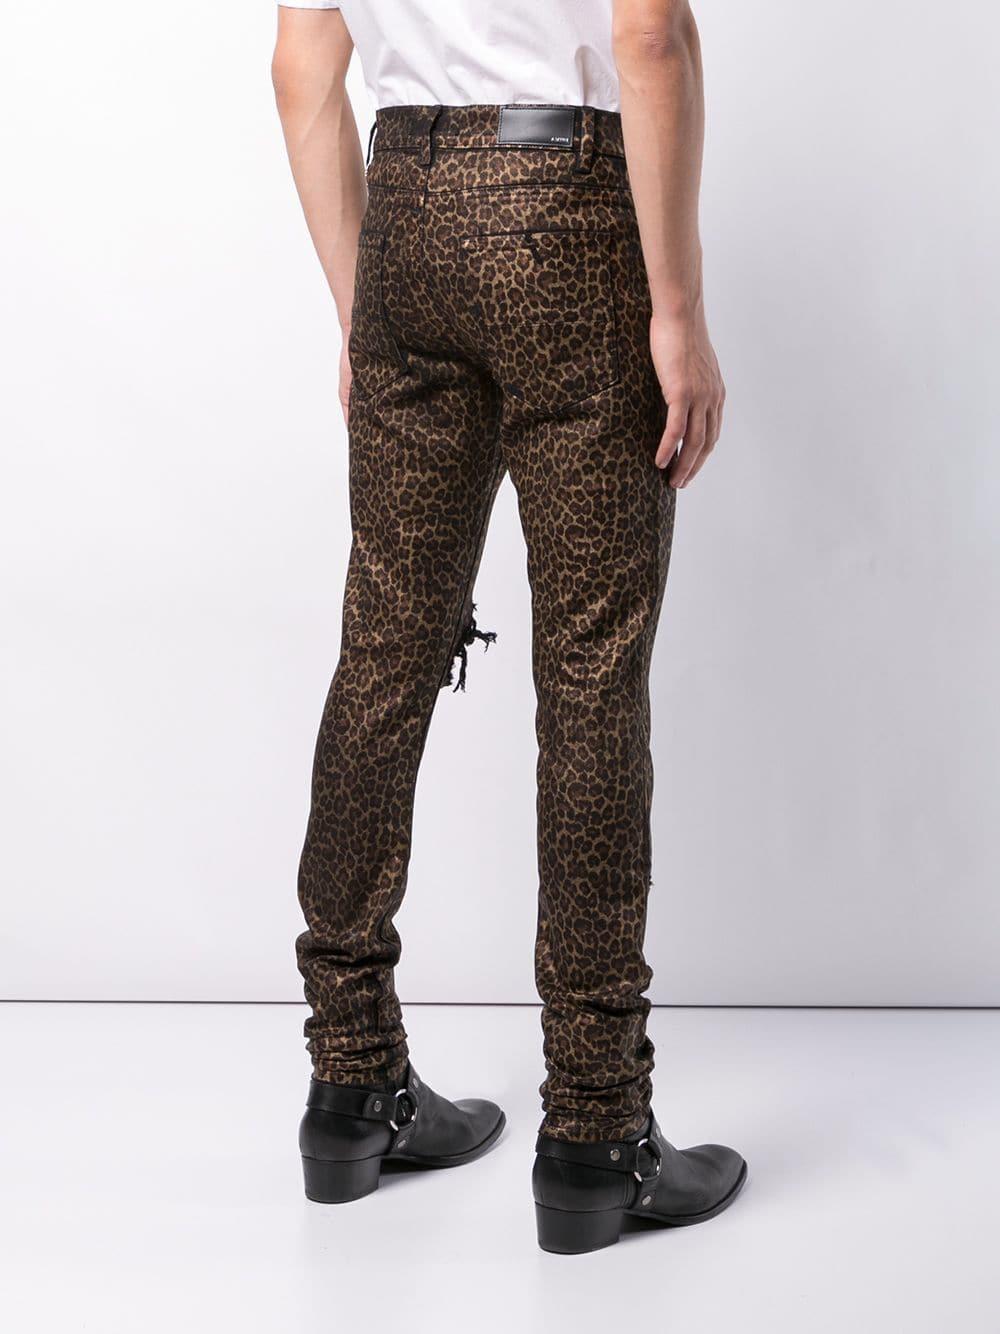 Amiri Denim Broken Leopard Print Jeans in Black for Men - Lyst